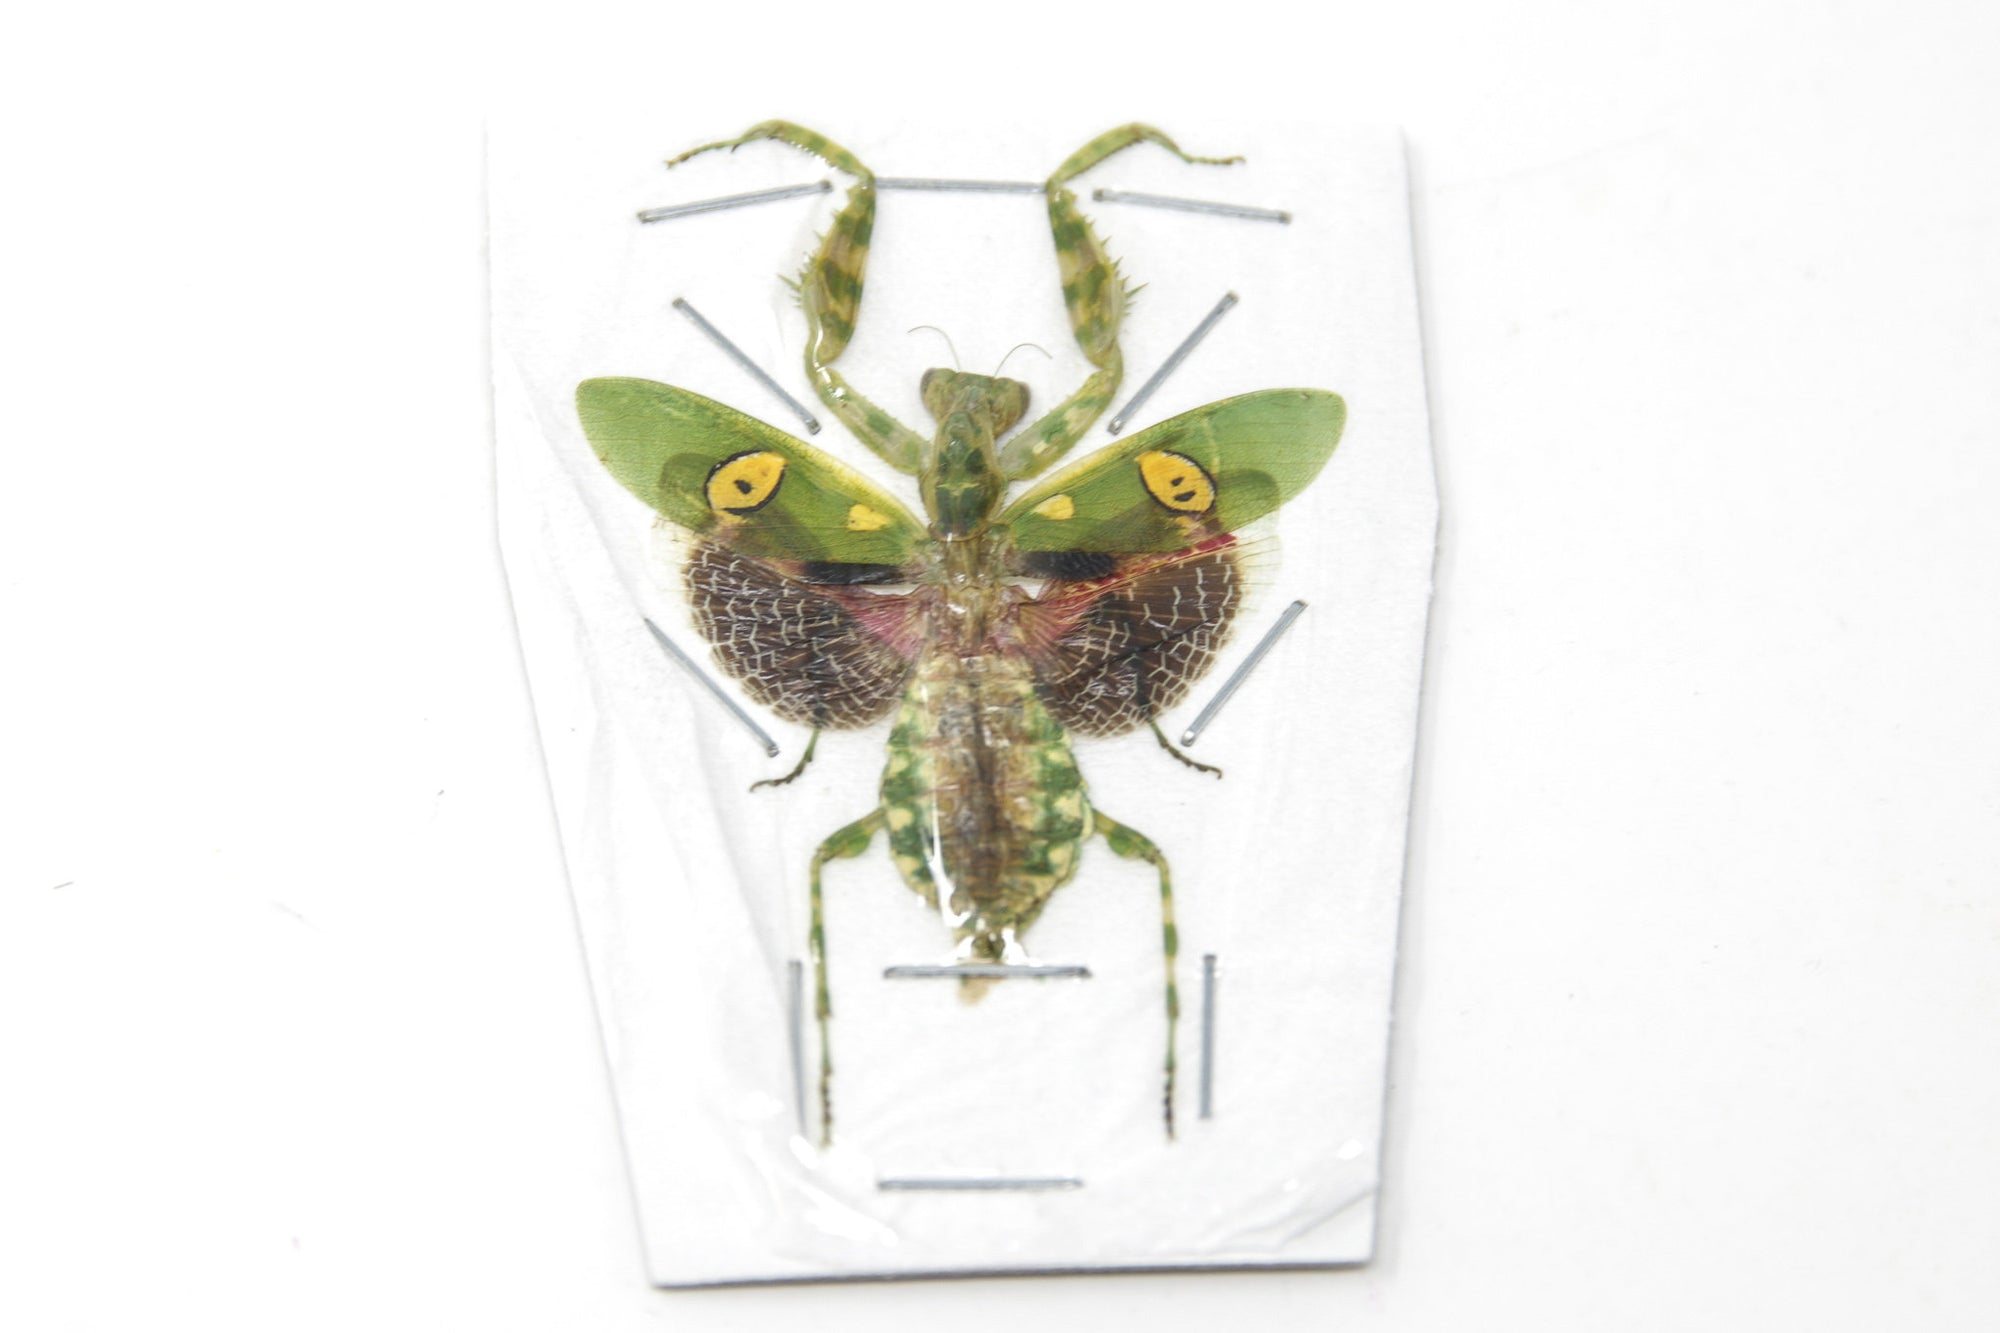 2 x Creobroter gemmatus | Jewelled Flower Praying Mantis Spread | A1 Specimen